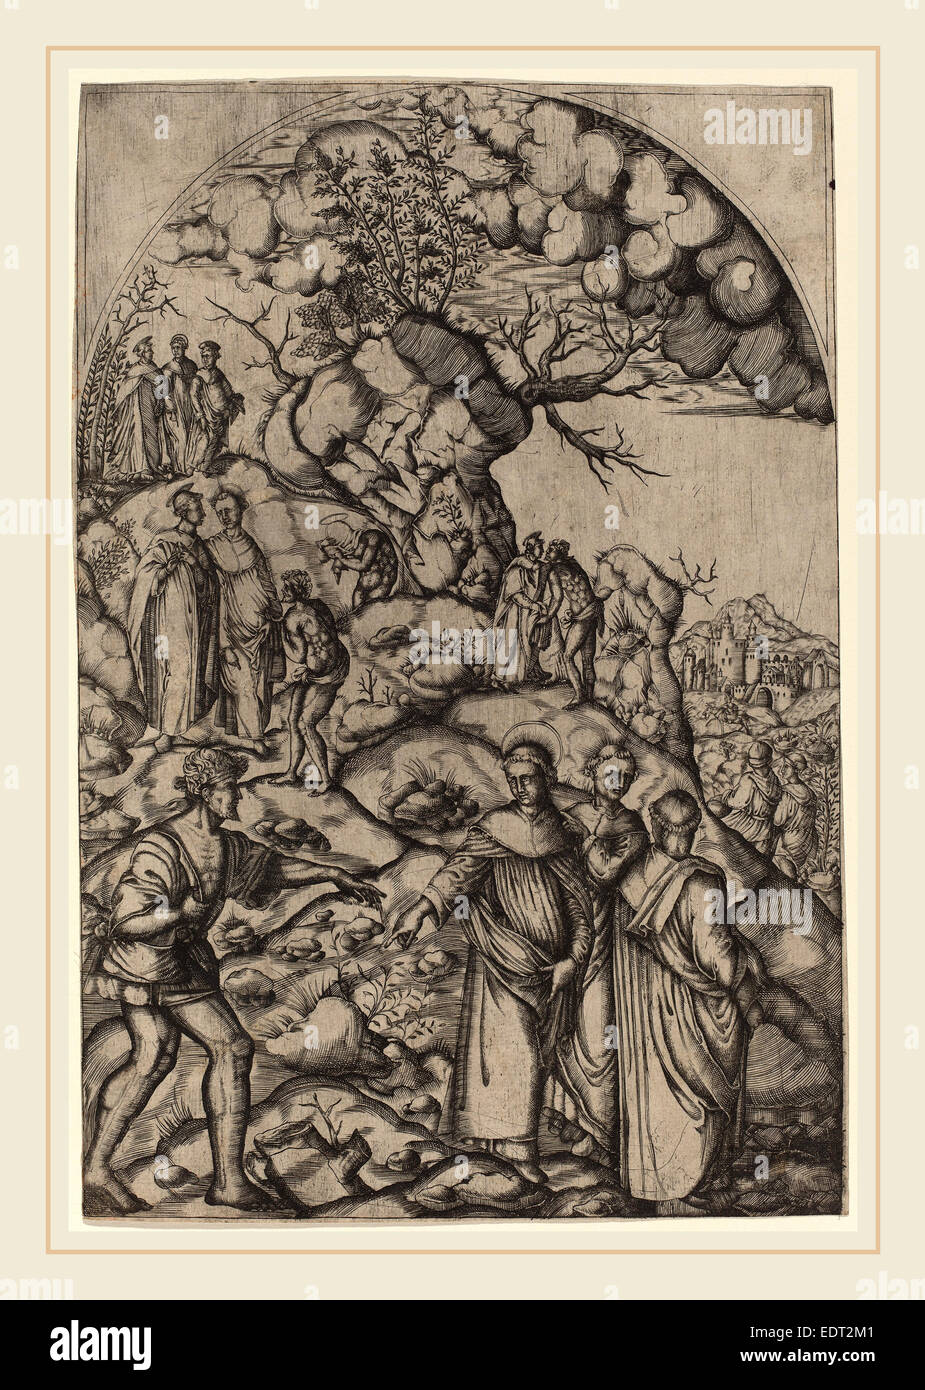 after Andrea del Sarto, Saint Filippo Benizzi Healing a Beggar, c. 1510-1520, engraving Stock Photo